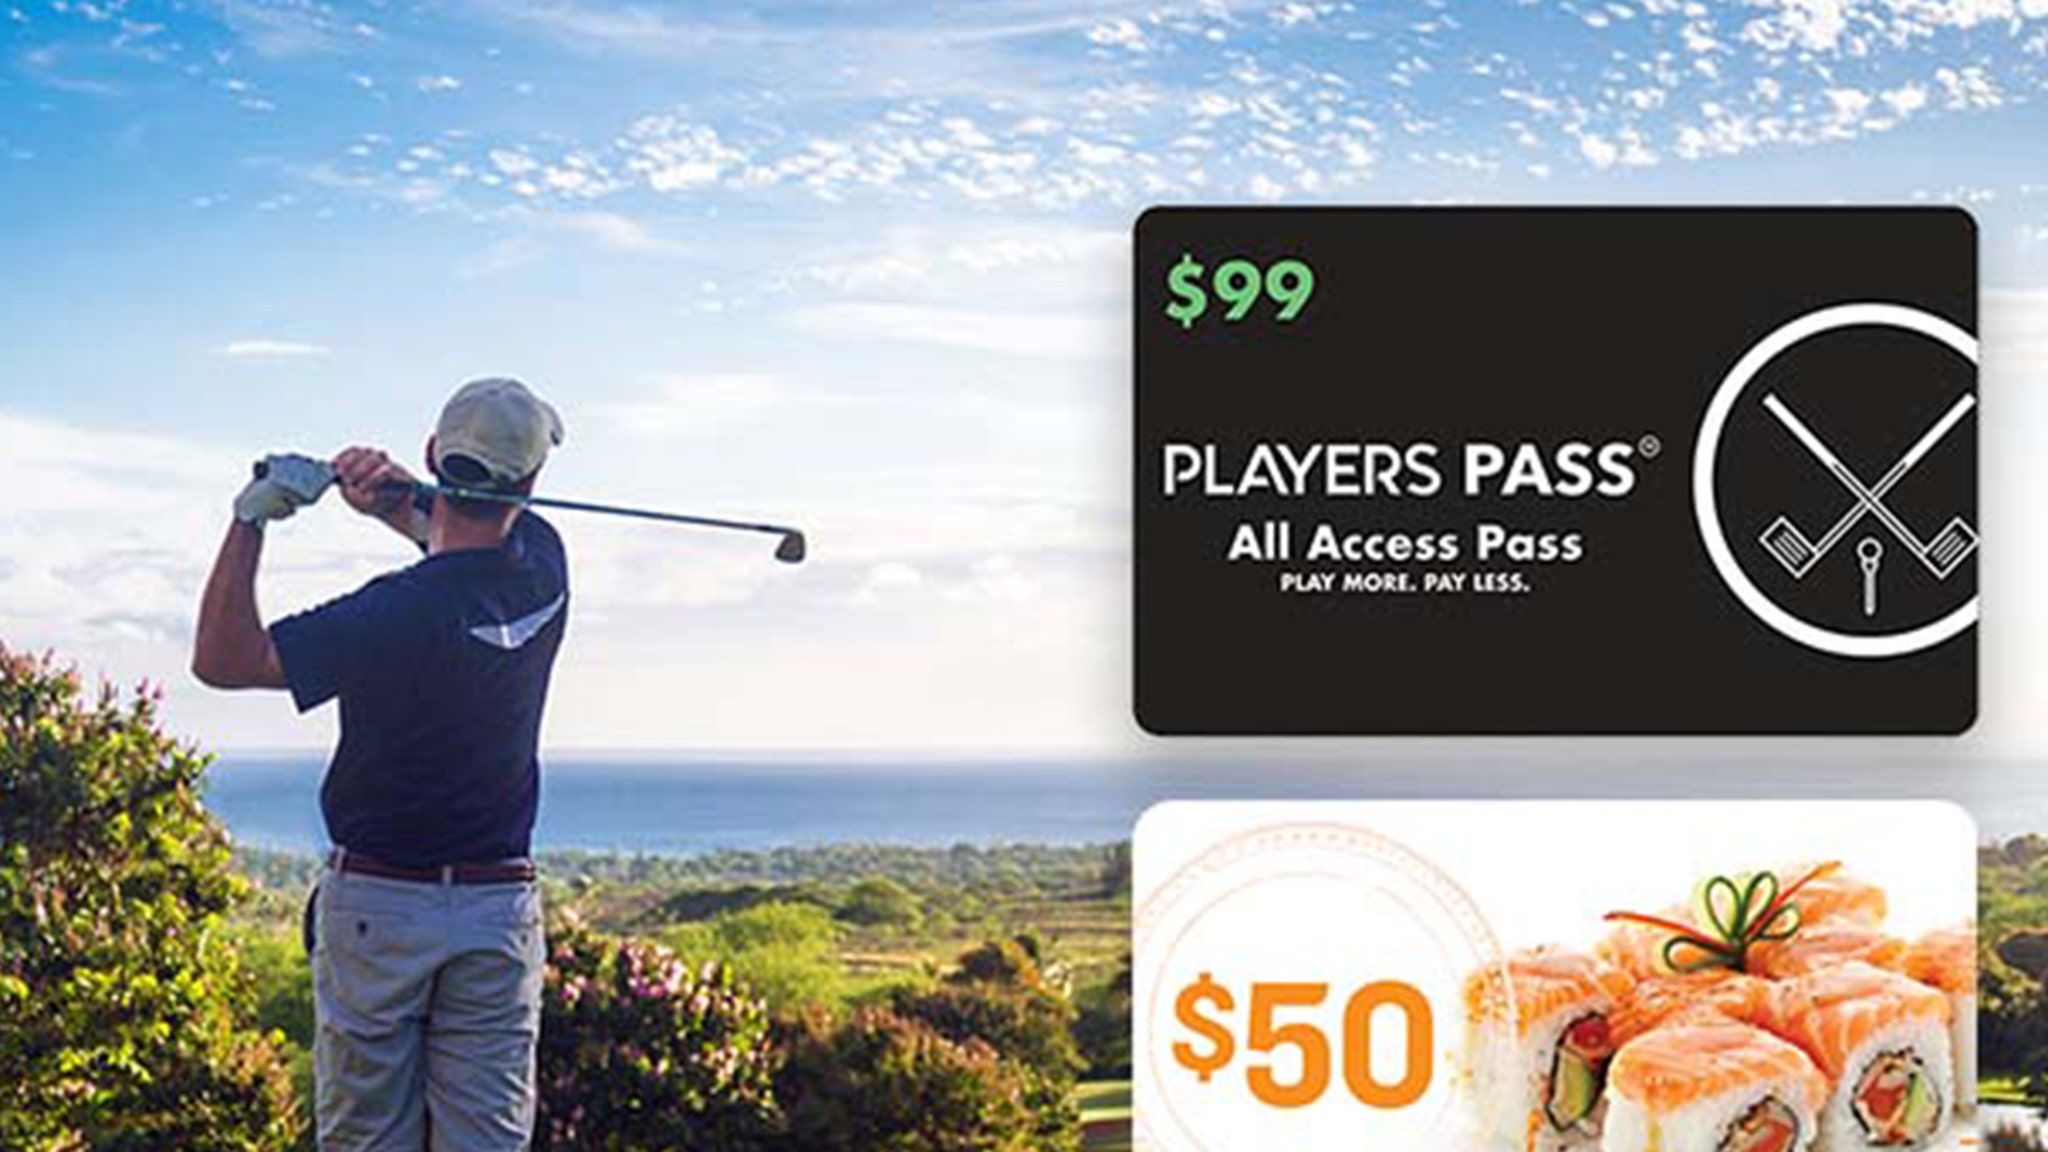 This Golf Membership & Restaurant.com eGift Card Deal Is Only $44.99